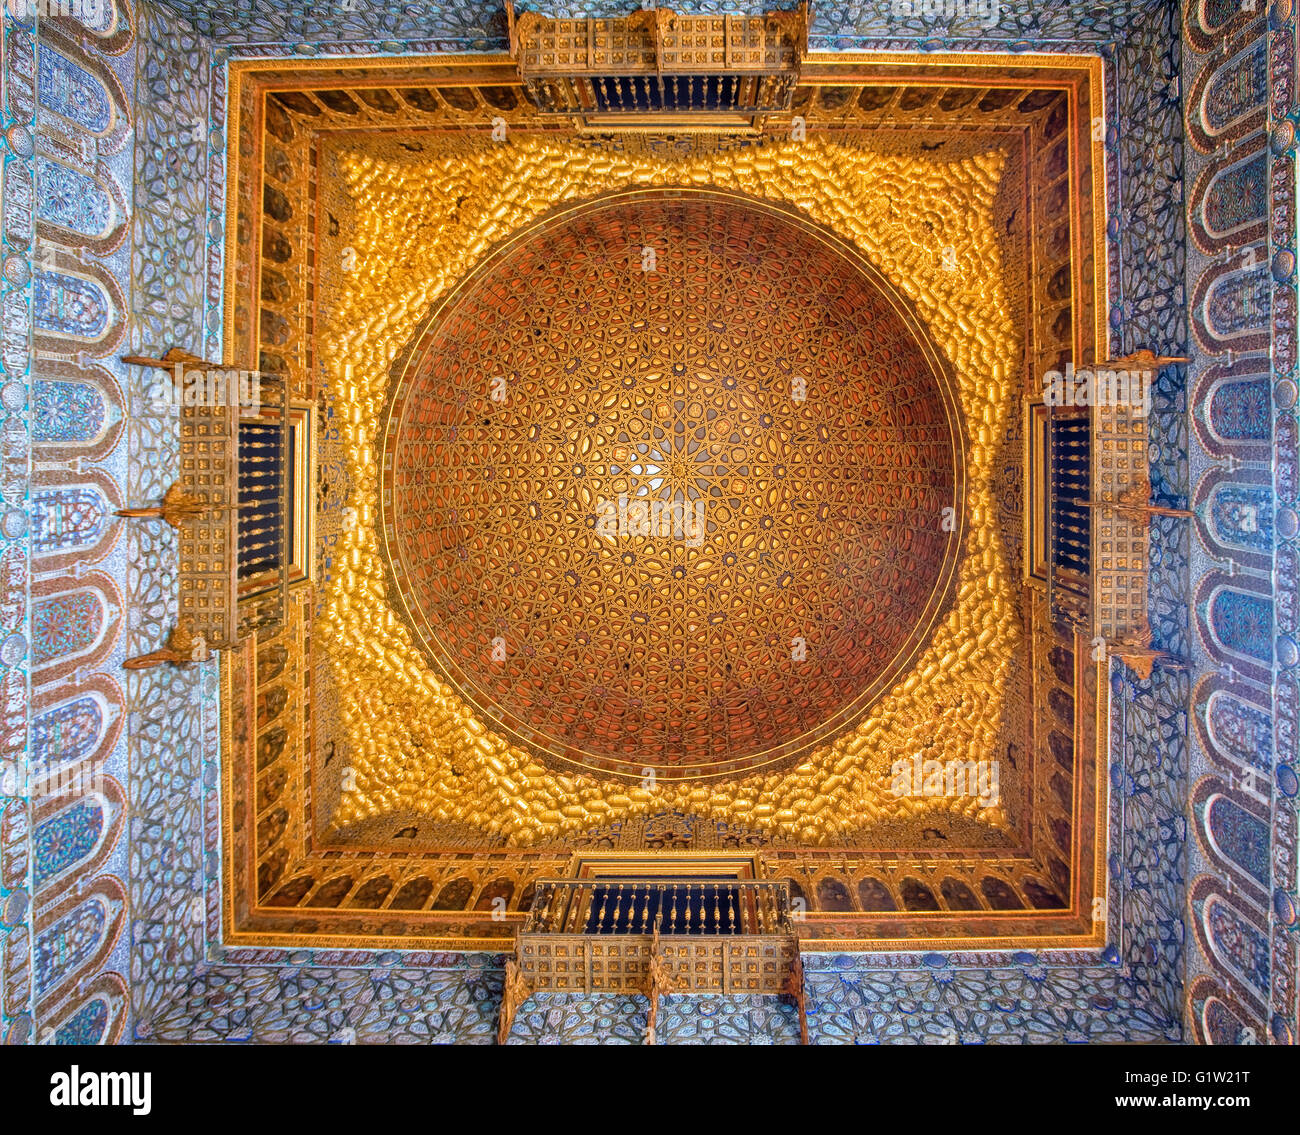 Elaborate gilded dome ceiling in the Alcazar, Sevilla Stock Photo